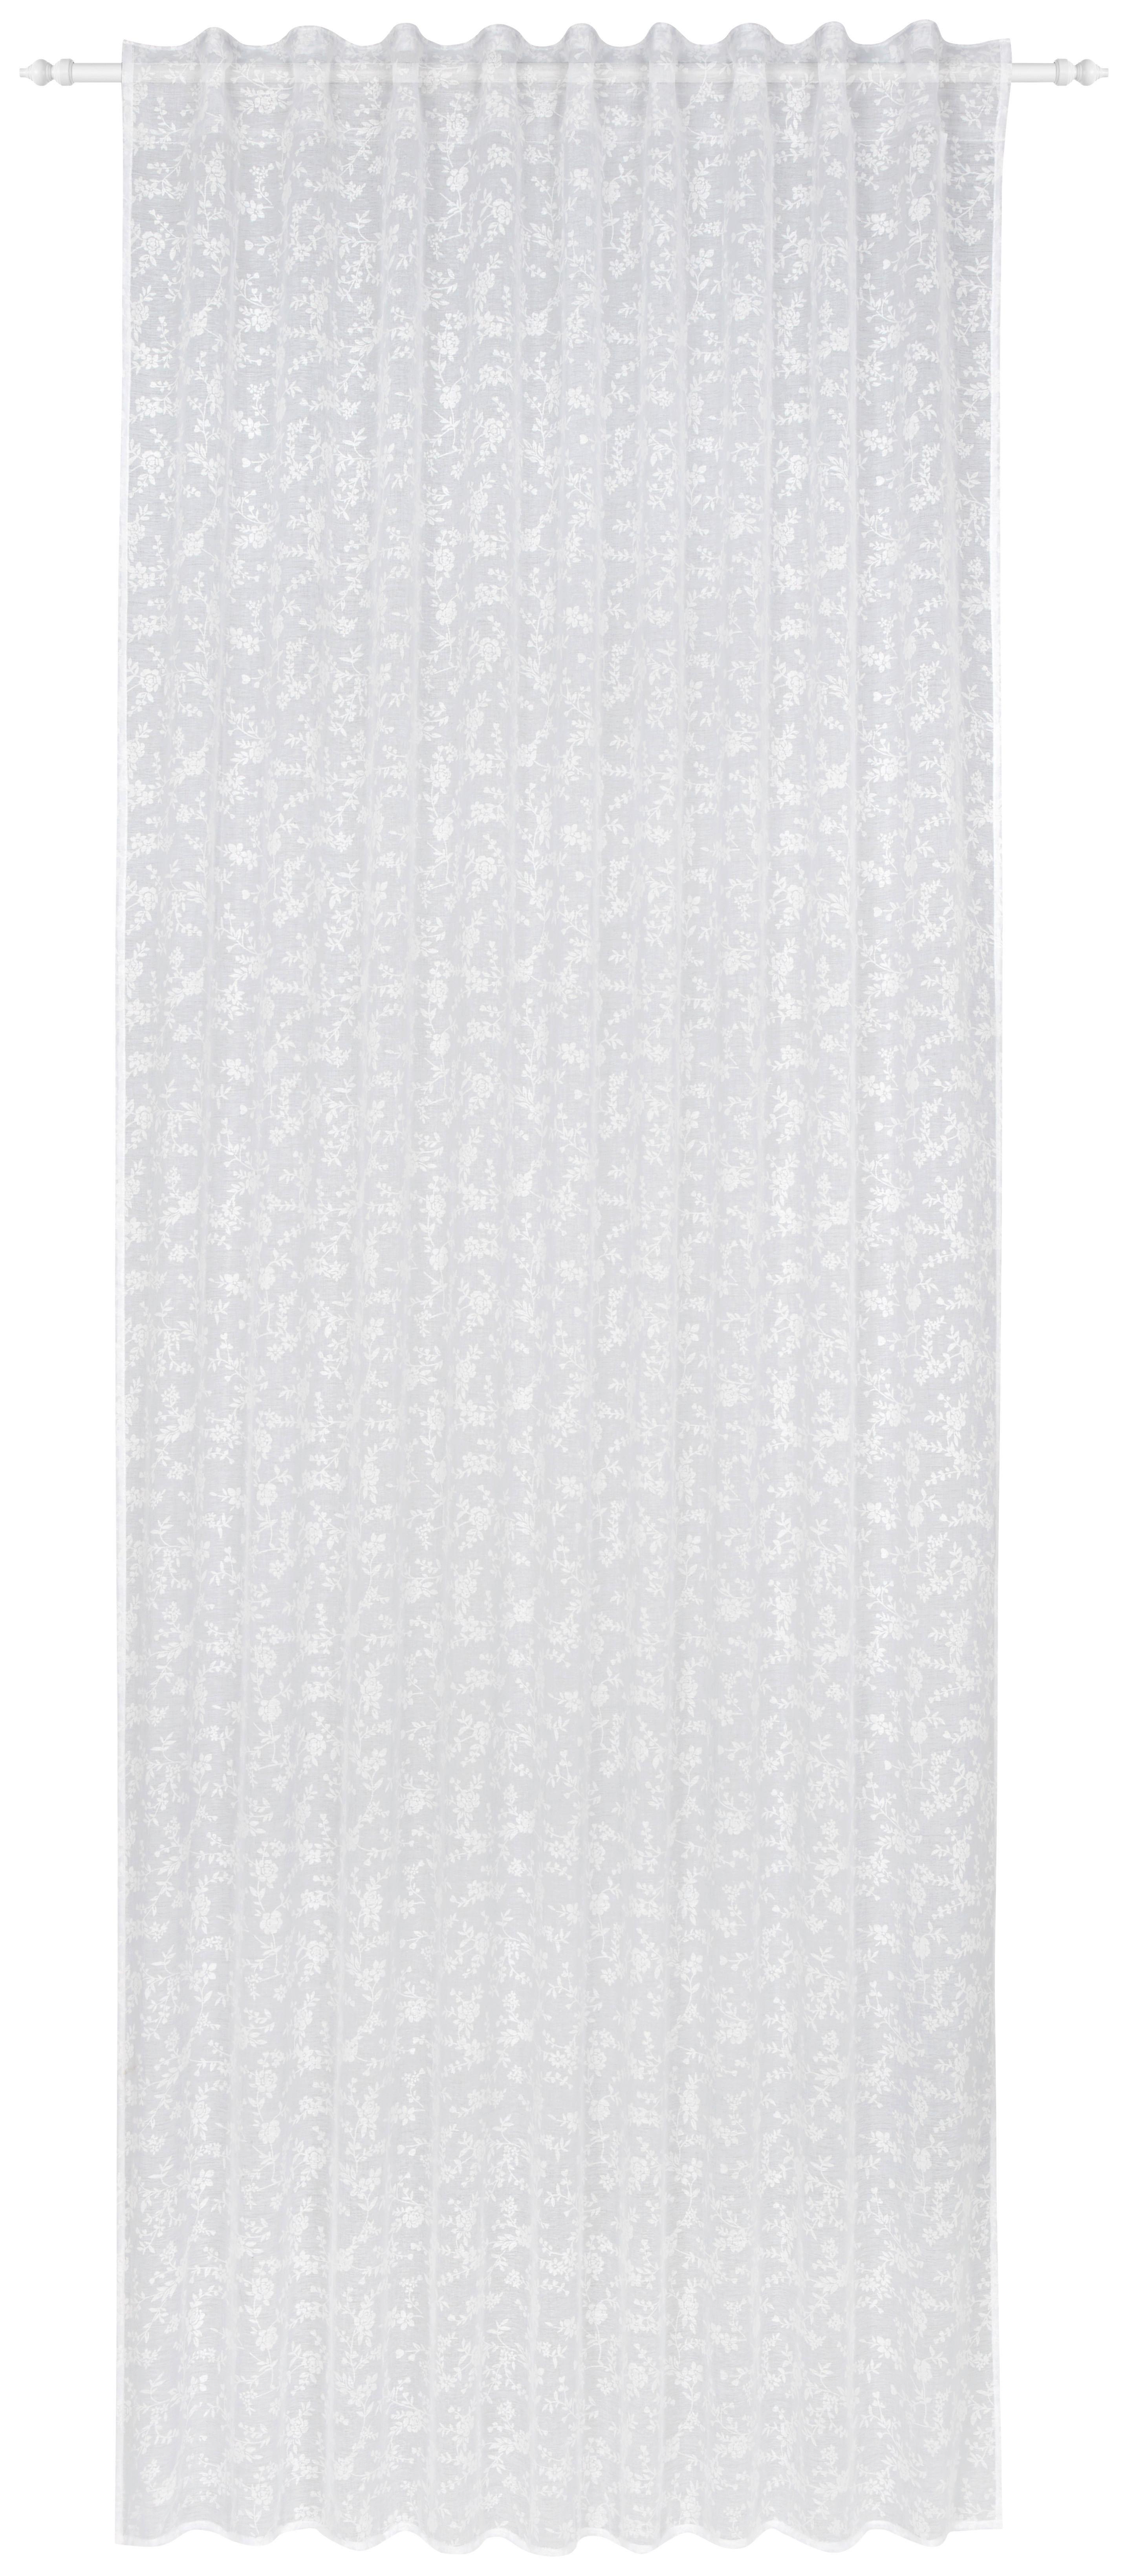 Hotový Závěs Raphaela, 140/245 Cm - bílá, Romantický / Rustikální, textil (140/245cm) - Zandiara